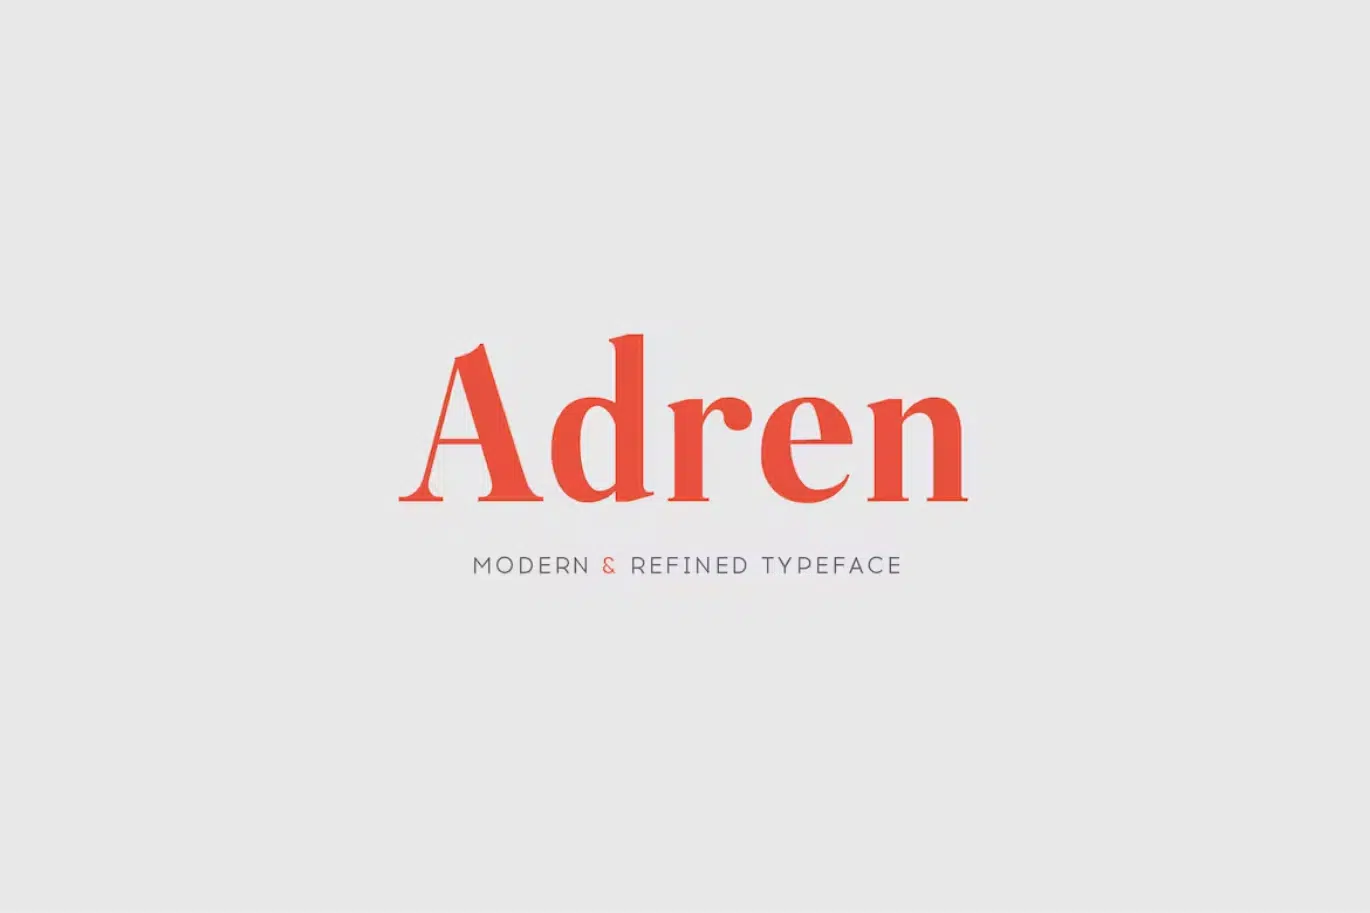 Aldren Font Similar To Georgia